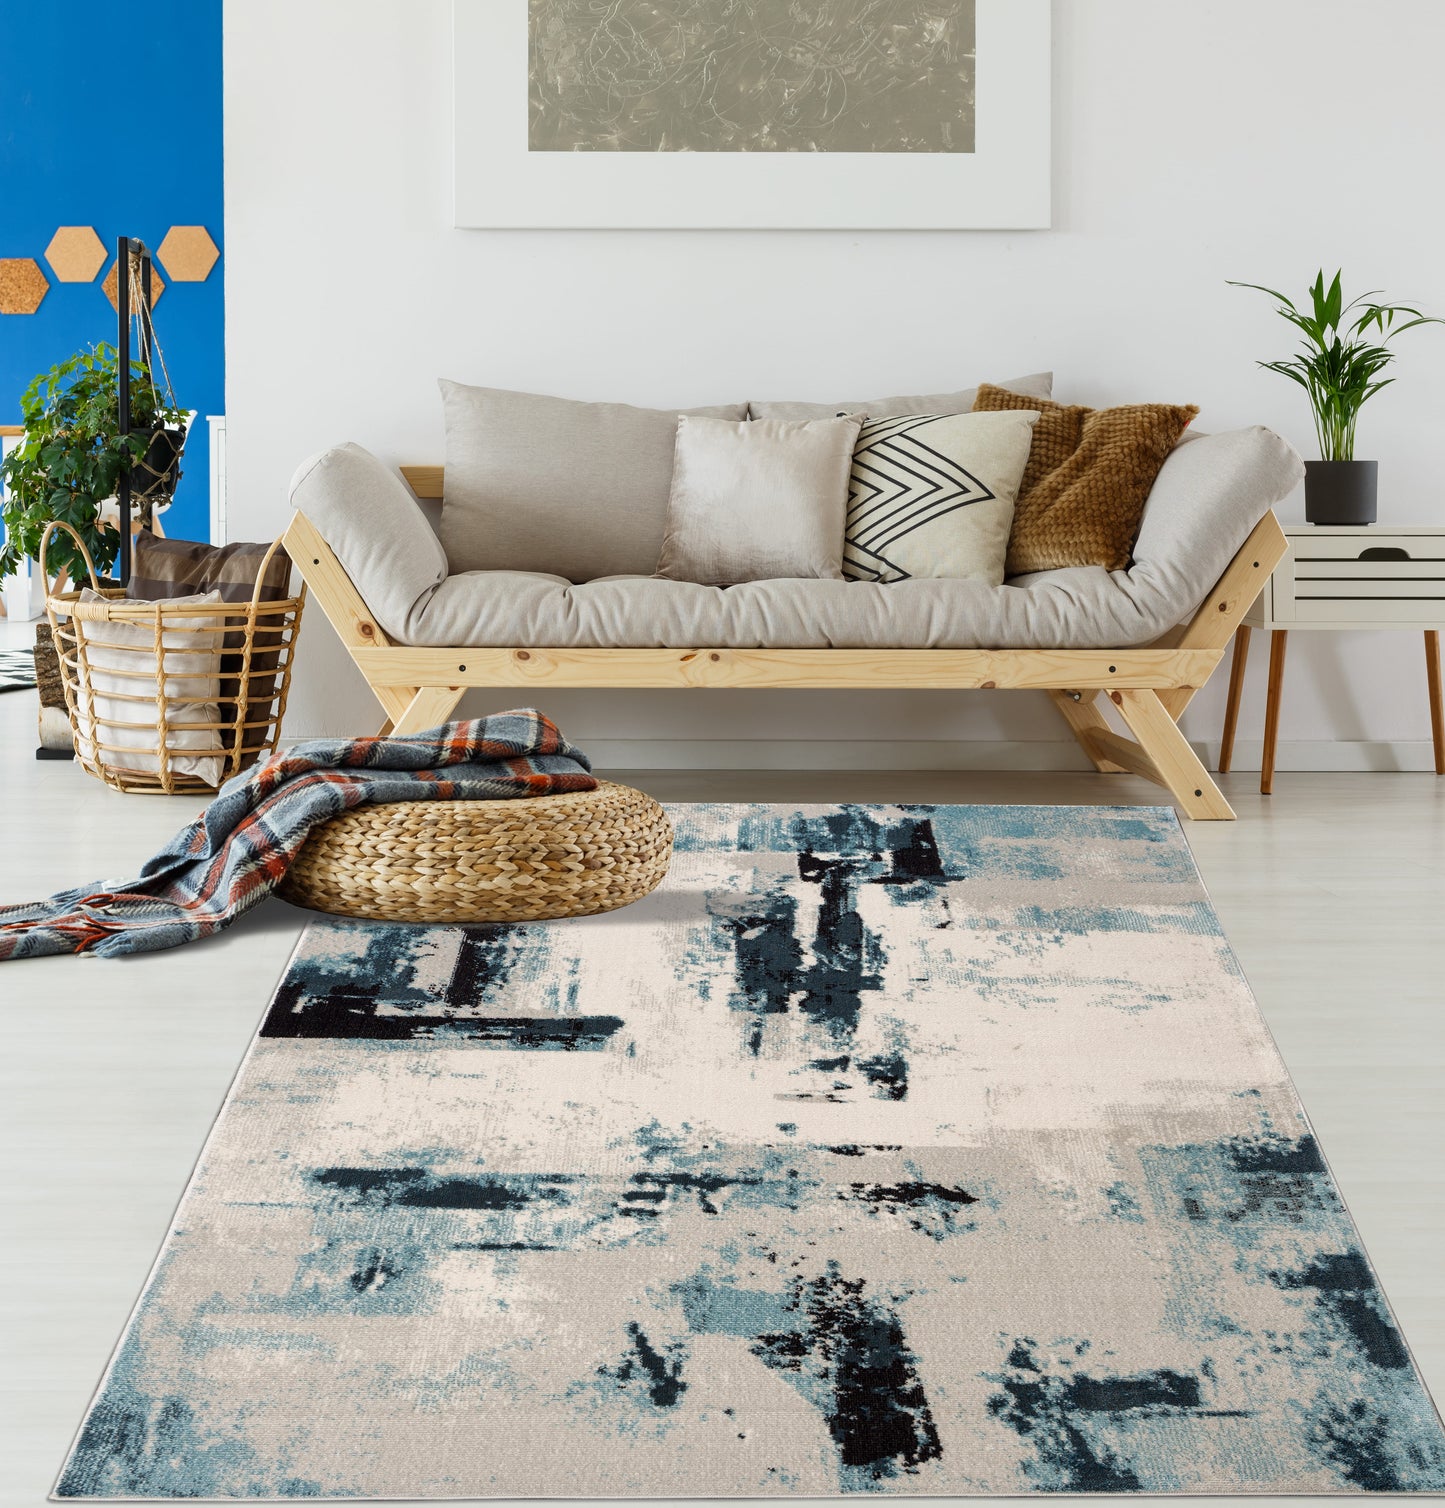 la dole rugs light dark blue beige rustic pattern abstract modern minimalistic area rug 6x8, 6x9 ft Living Room, Bedroom, Dining Area, Kitchen Carpet